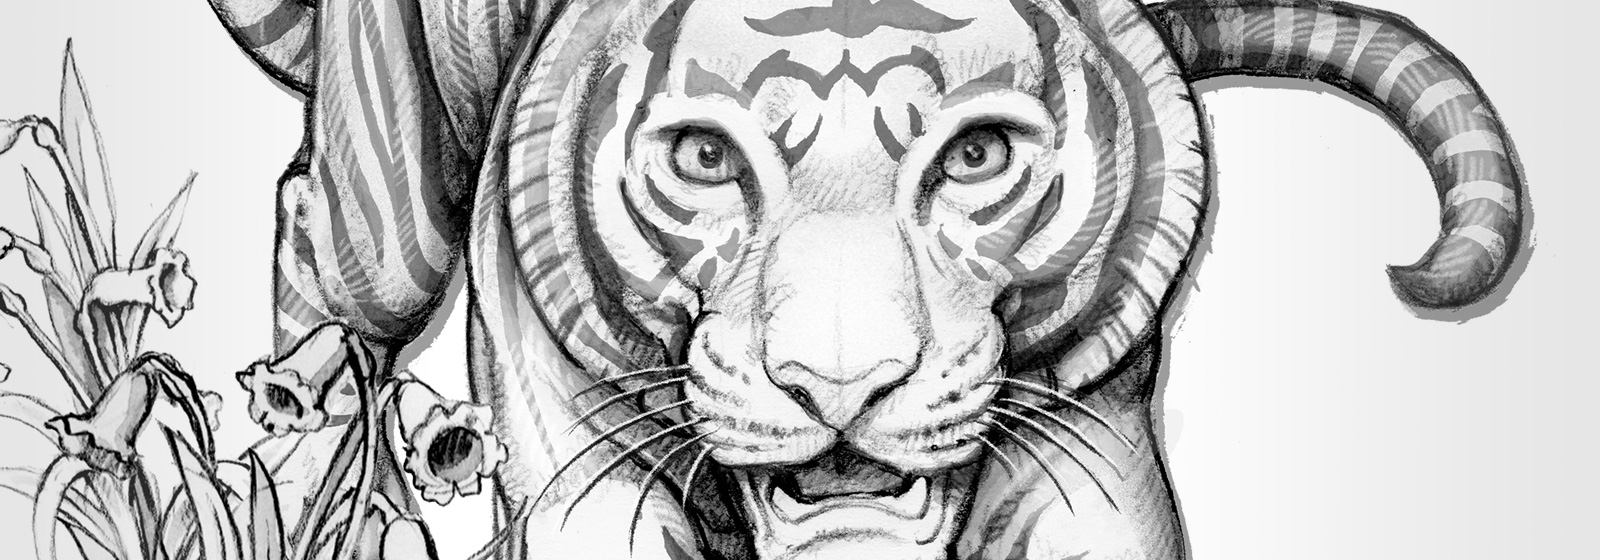 Meet the Maker - Lunar Year of the Tiger